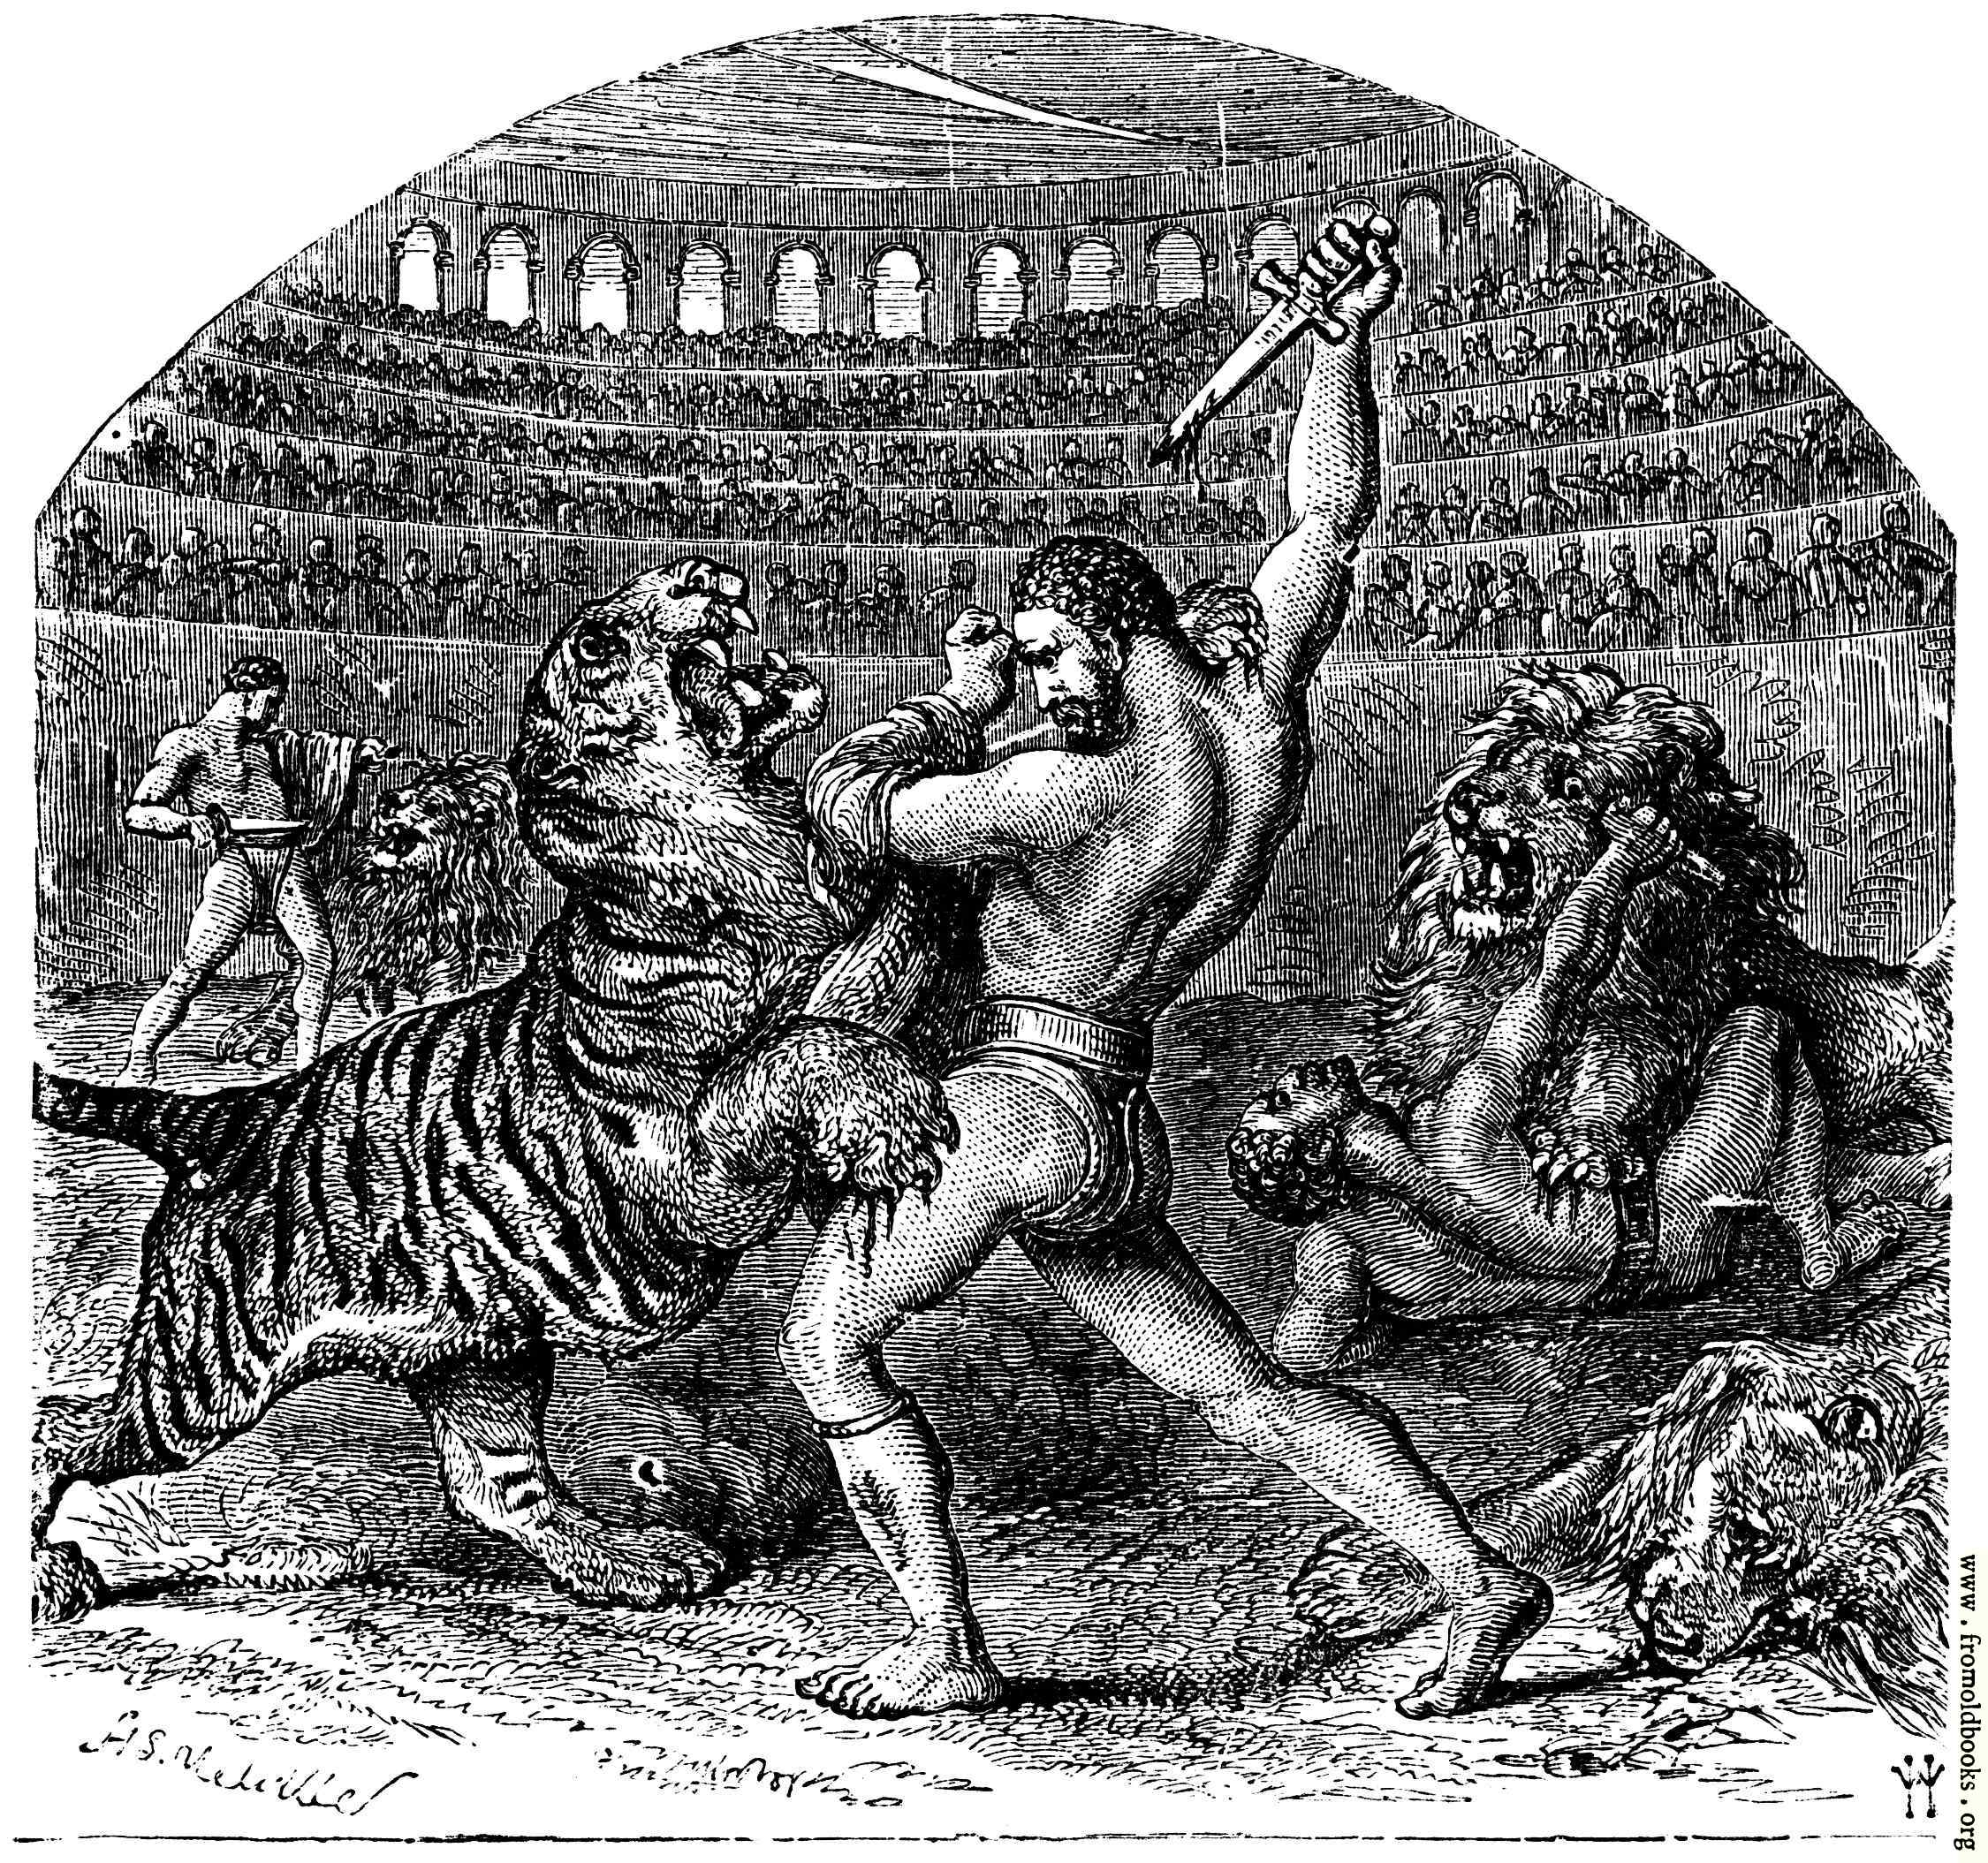 [Picture: Combat of Gladiators with Wild Animals]